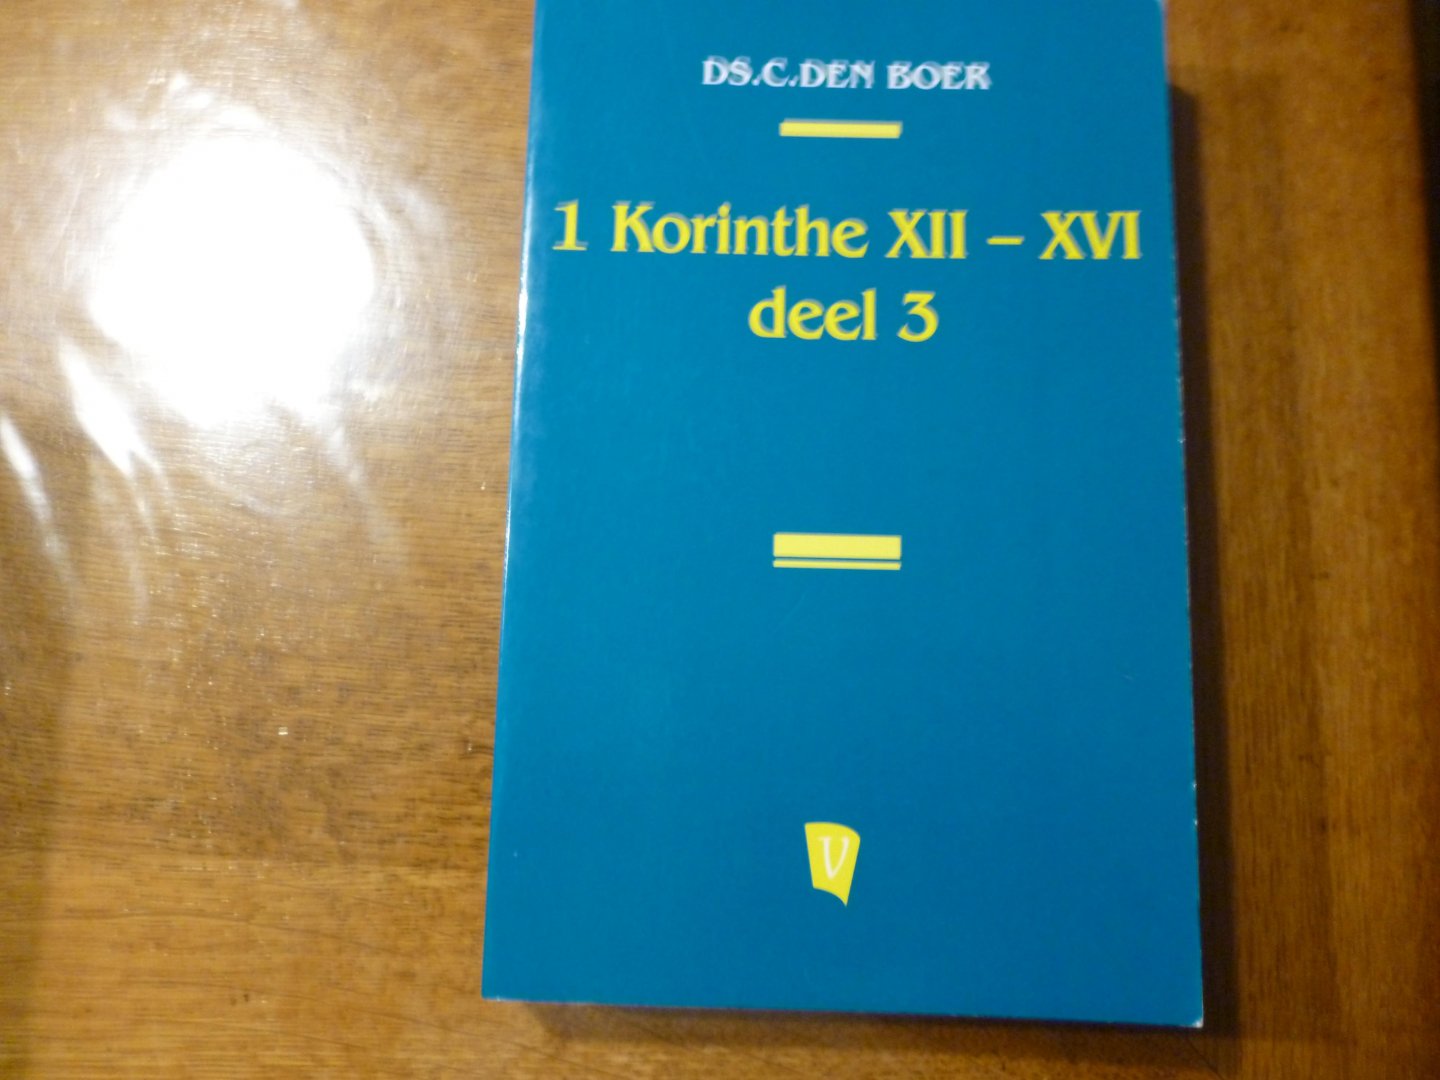 Boer den c. - 1 korinthe XII - XVI deel 3